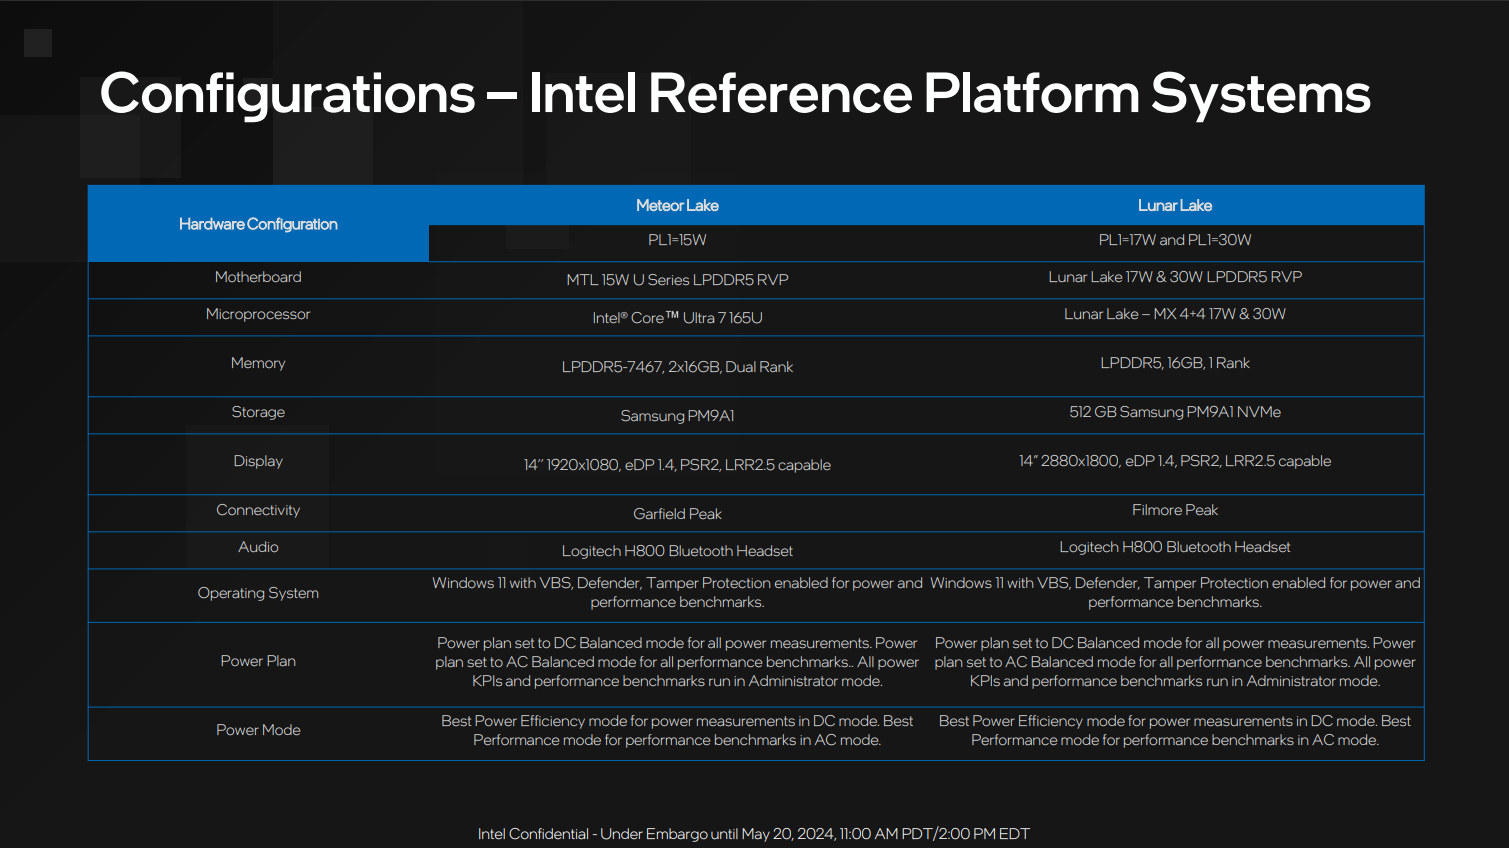 Intel Lunar Lake preview brief for press